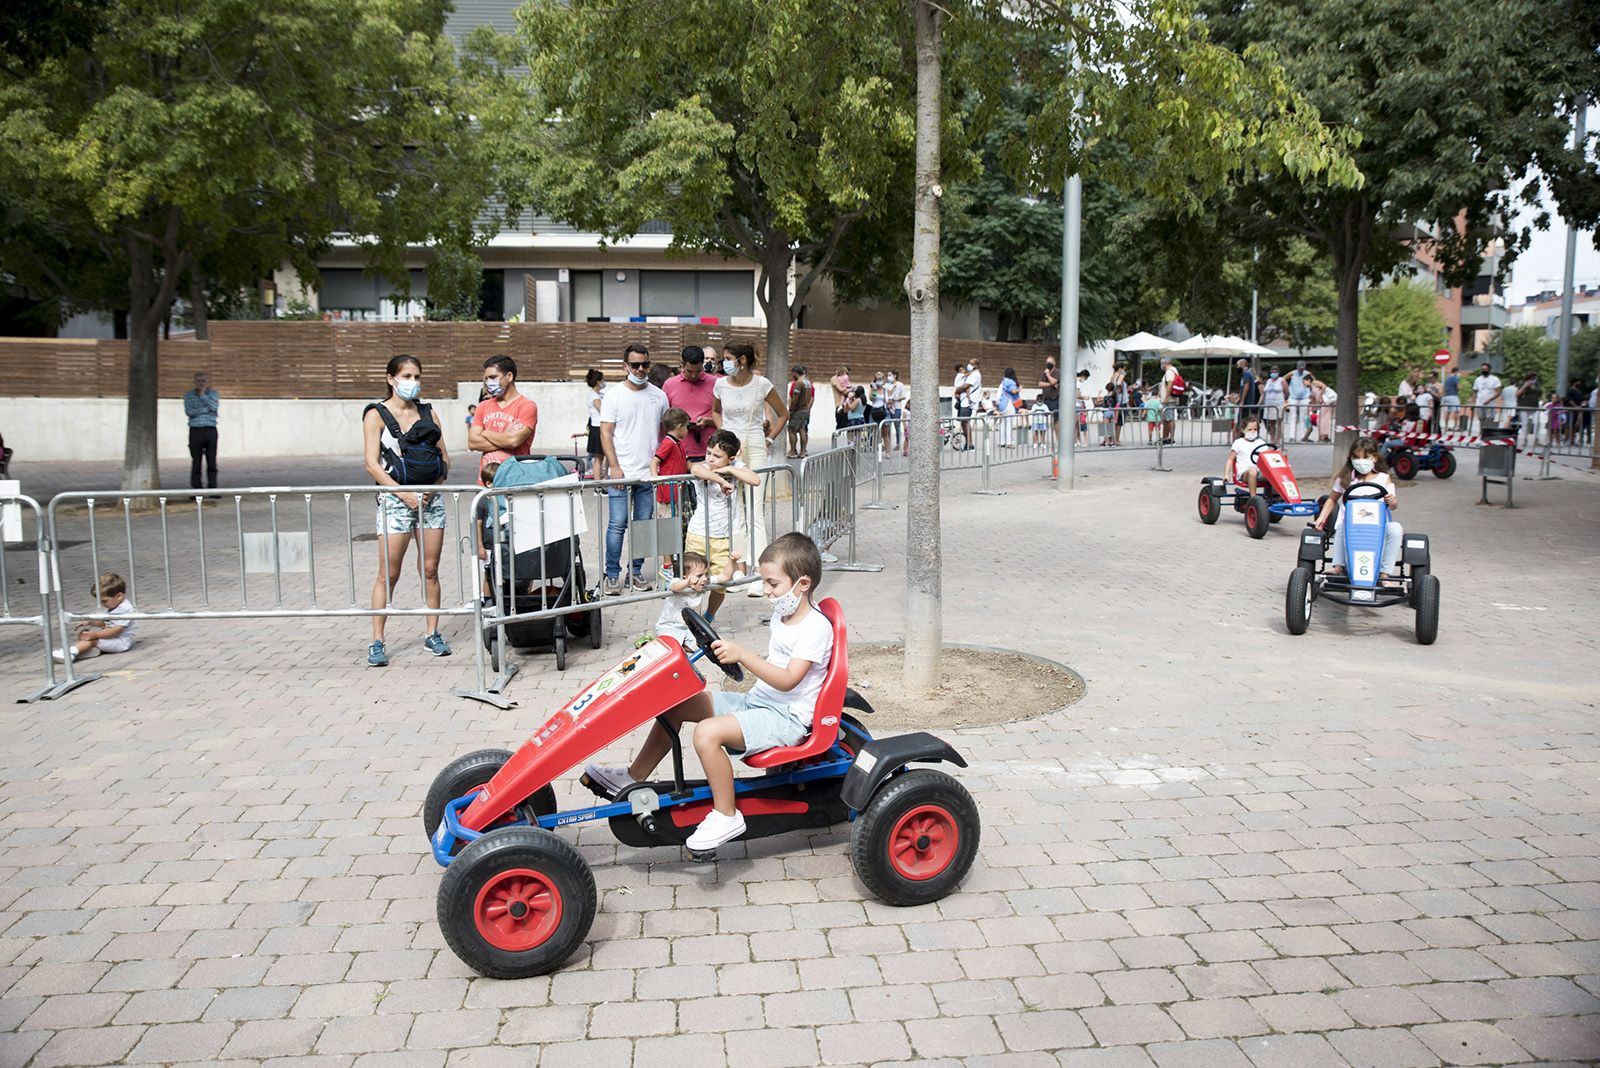 Circuit educació vial amb cars. Foto: Bernat Millet.